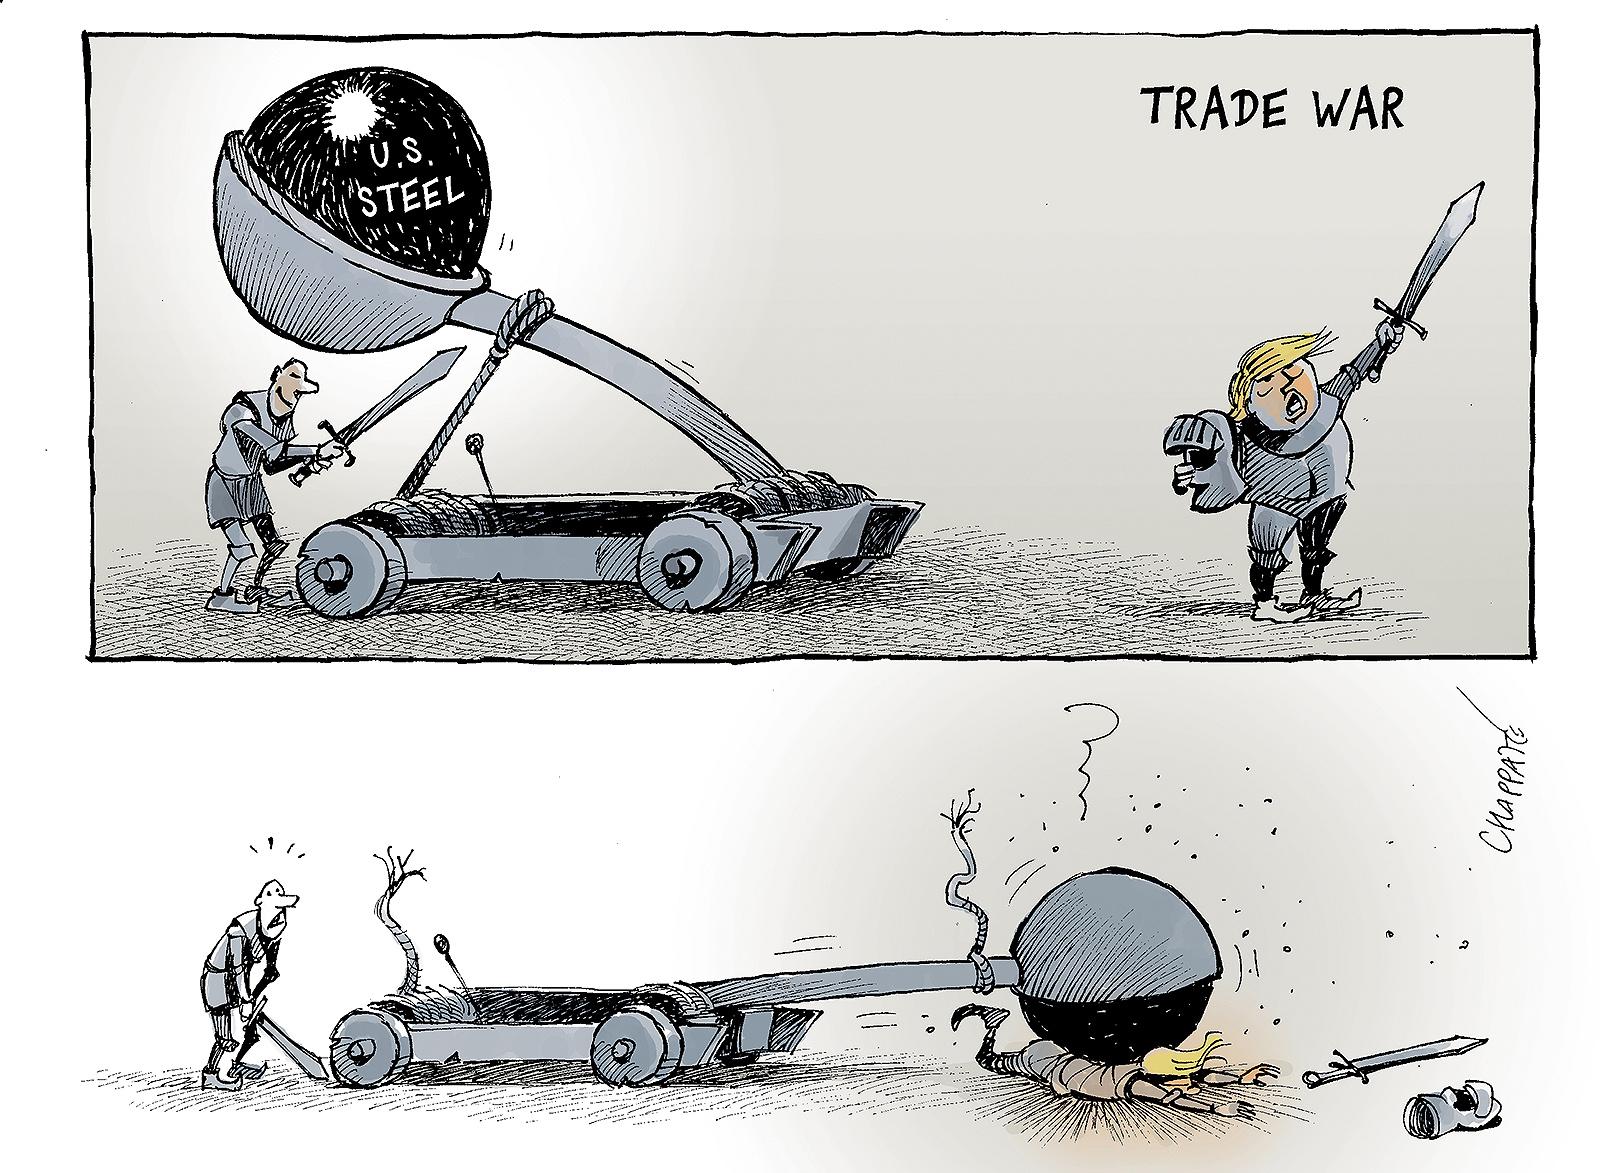 Starting a trade war...